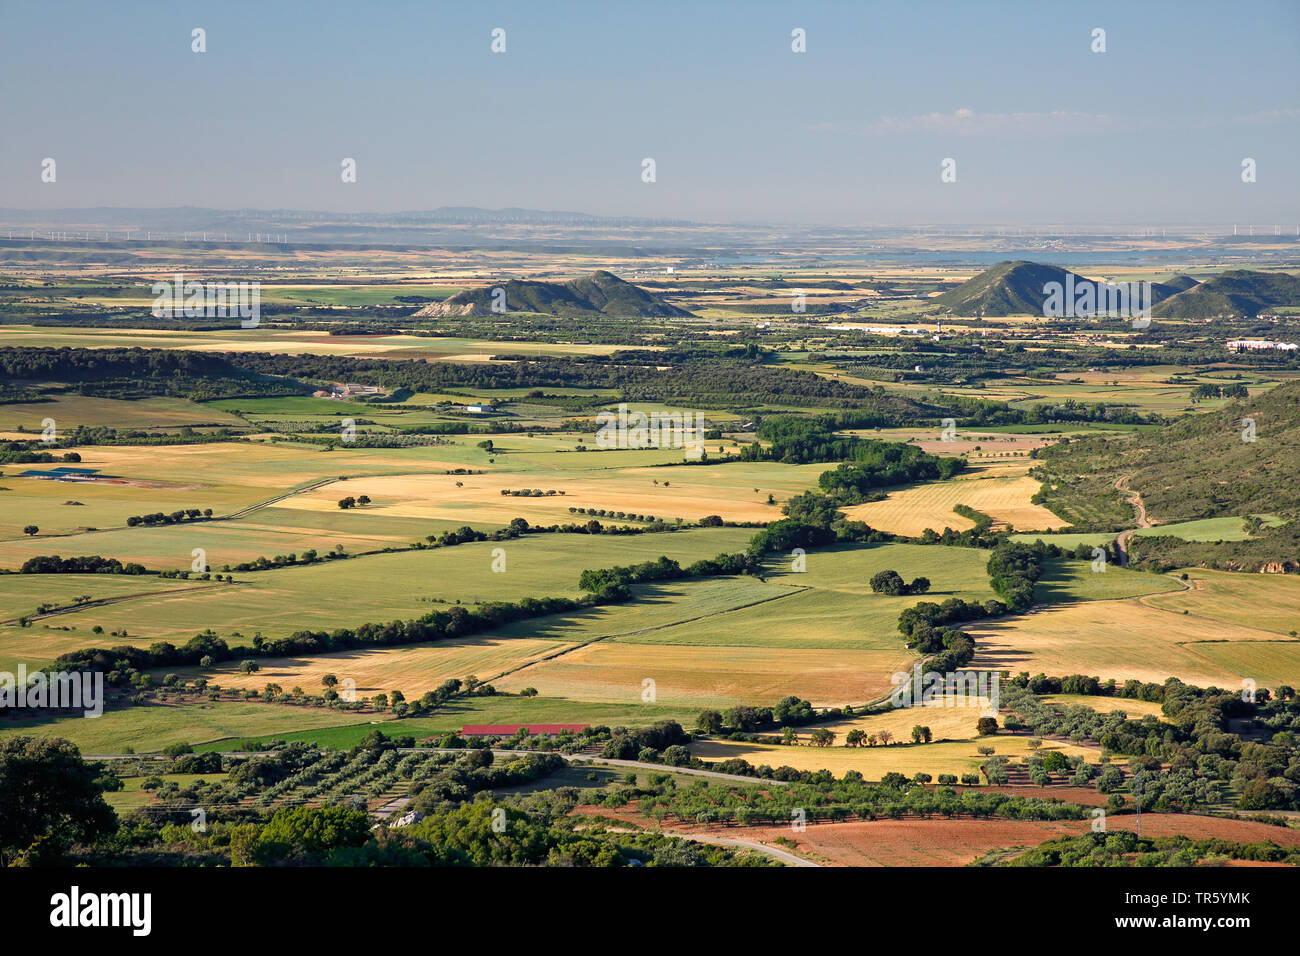 diverse agricultural landscape in Sarsamacuello, Spain, Aragon, Sarsamacuello Stock Photo